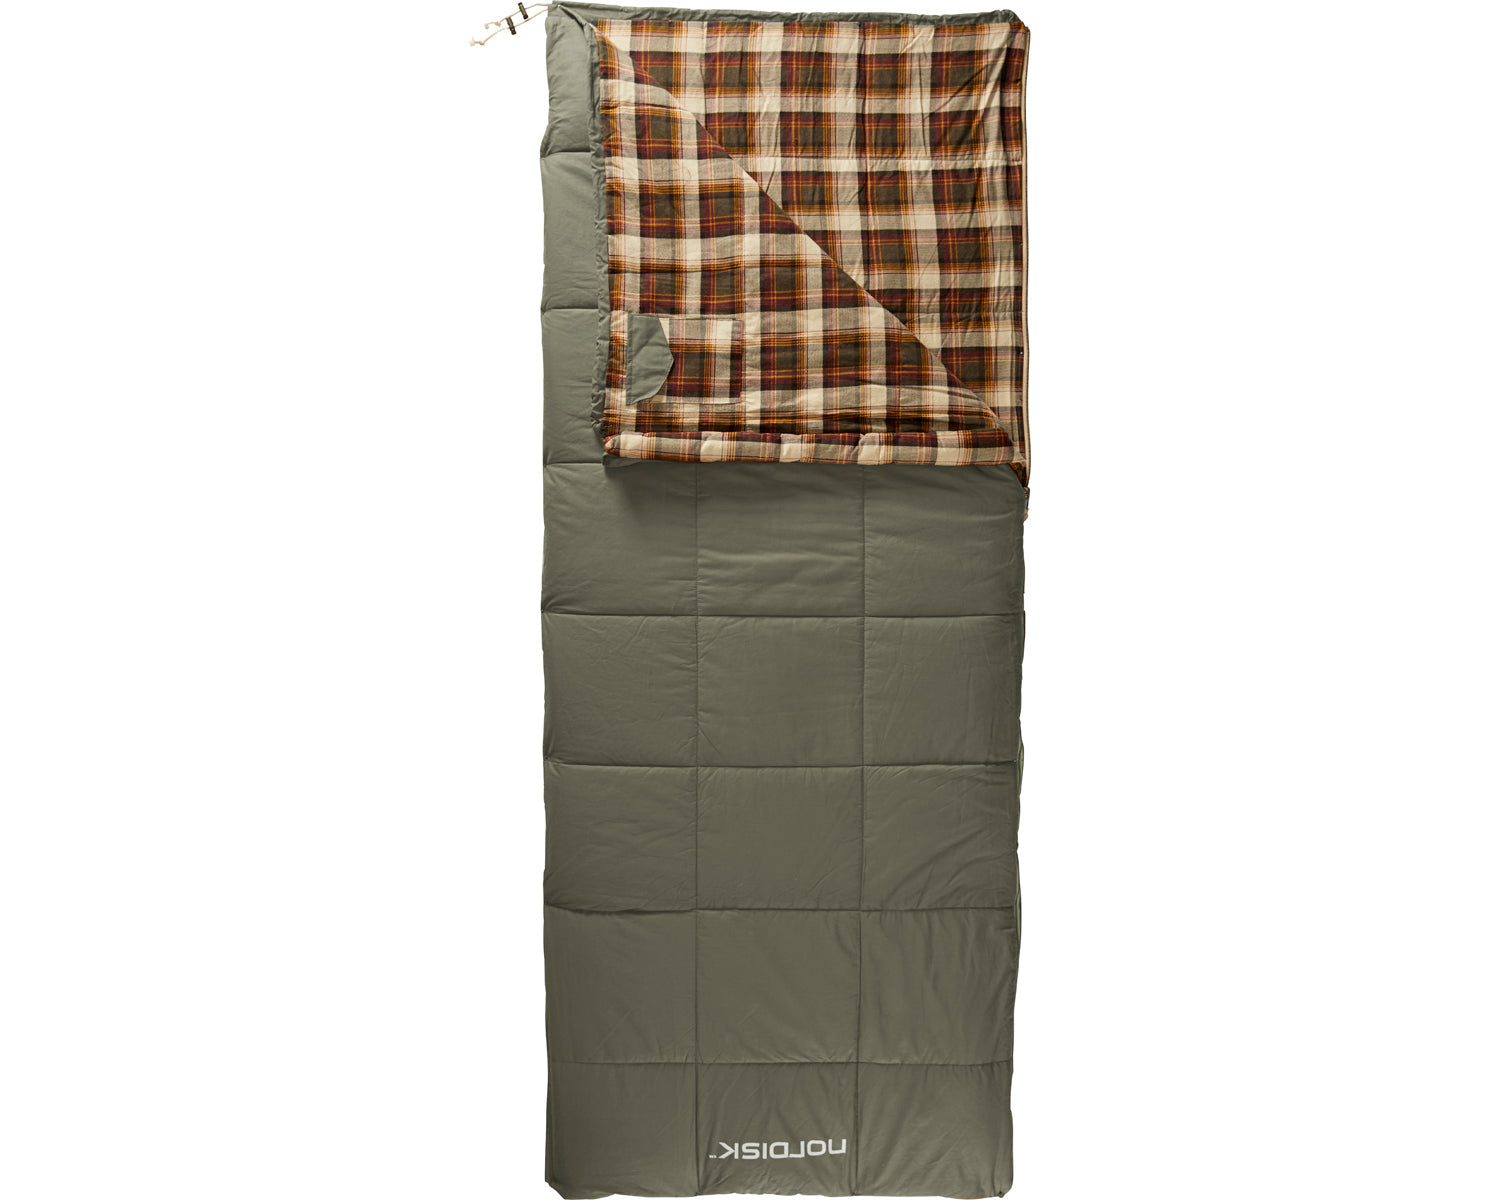 Almond +10° sleeping bag - Bungy Cord